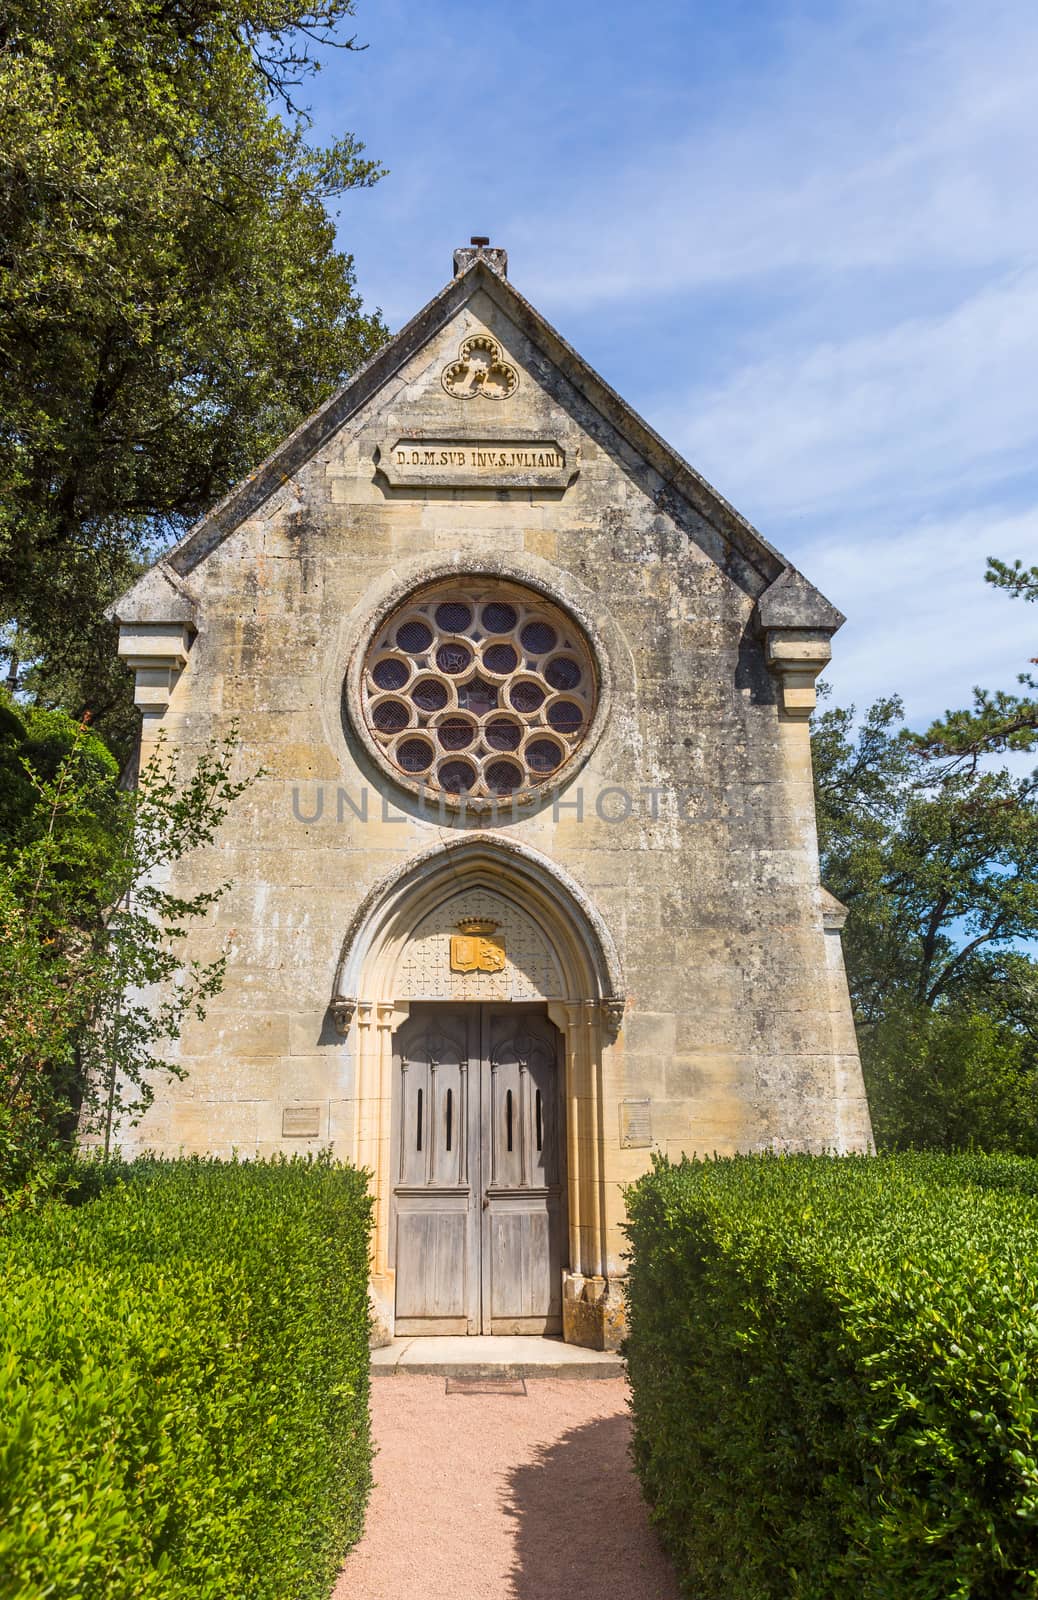 Chapel from Les Jardins de Marqueyssac by zittto